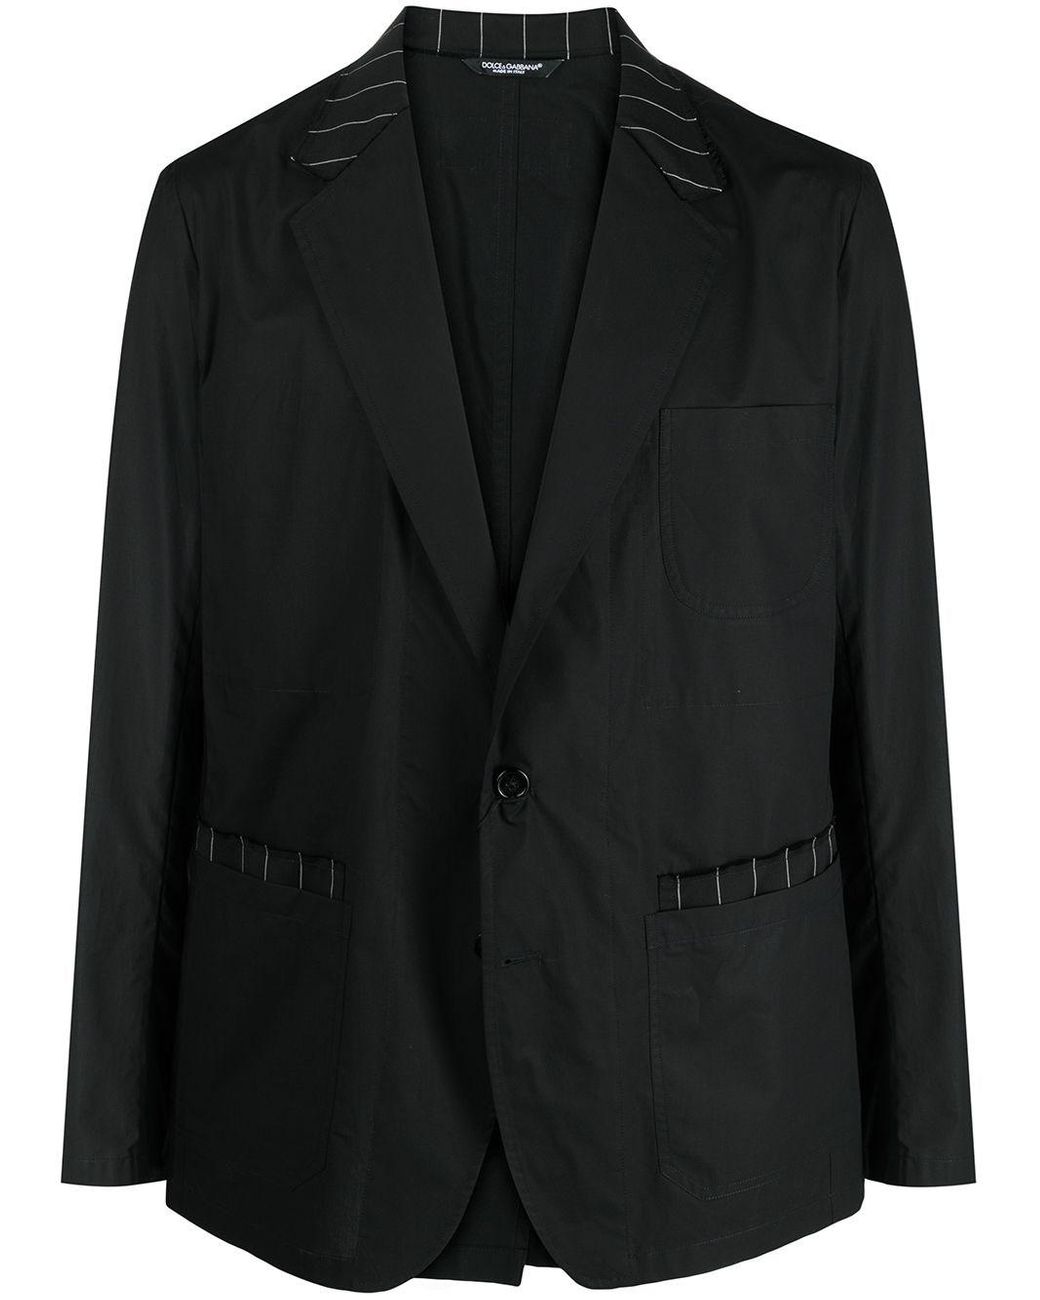 Dolce & Gabbana Cotton Jacket in Black for Men - Lyst